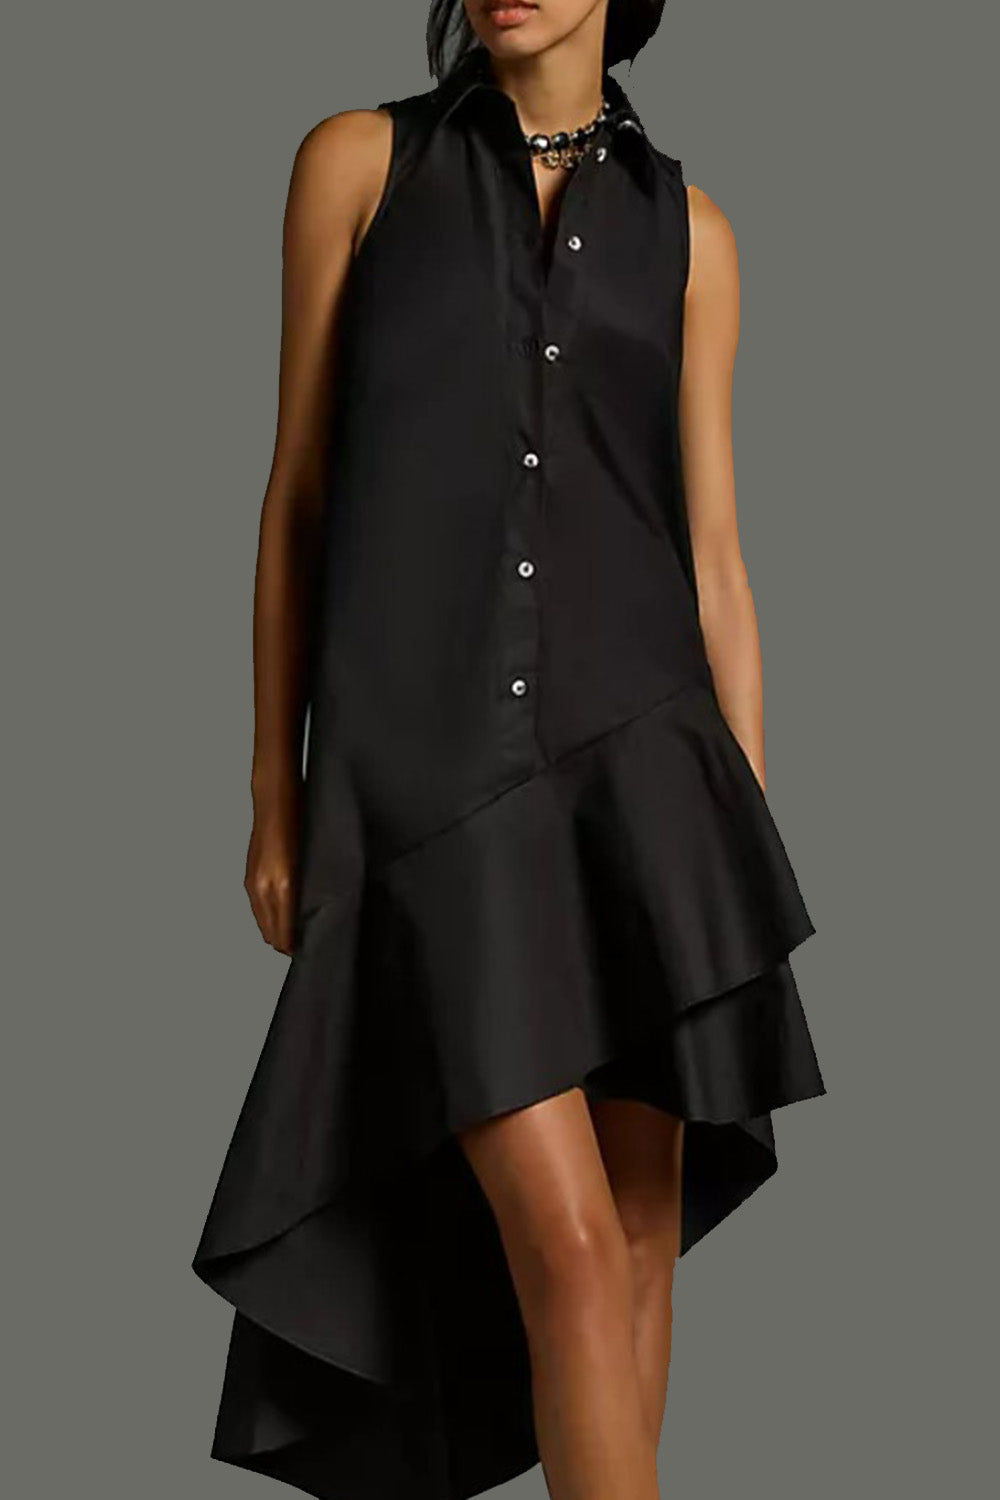 Opalescent Black Dress